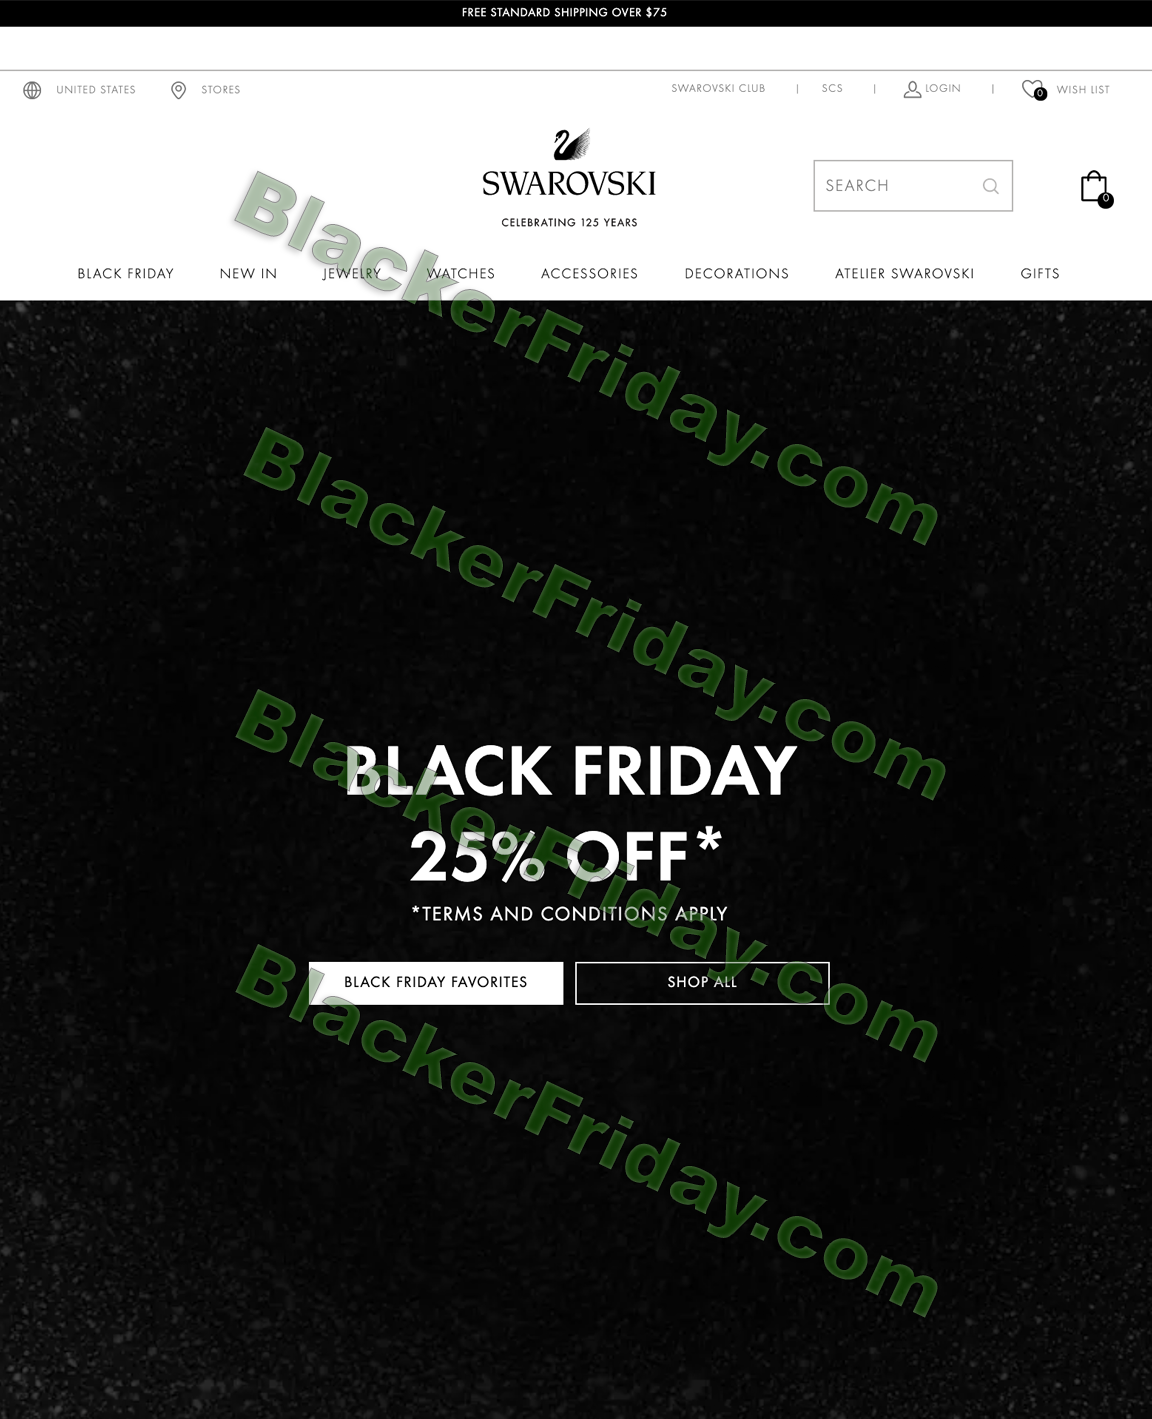 Swarovski Black Friday 2021 Sale - What to Expect - Blacker Friday